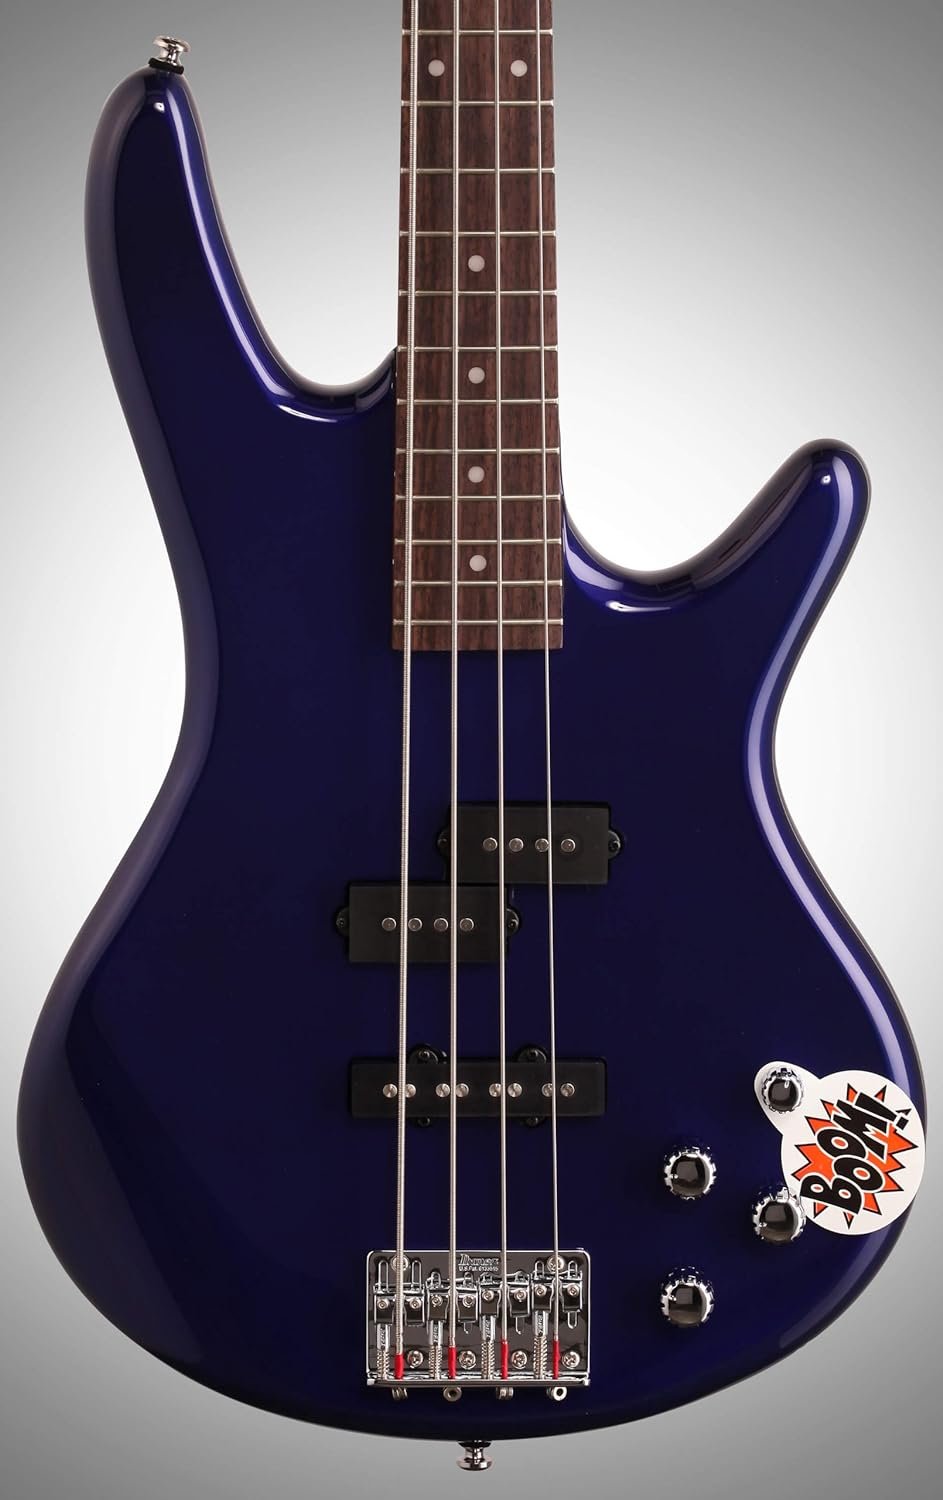 Ibanez GSR 5 String Bass Guitar, Right, Roadster Orange Metallic (GSR205ROM)